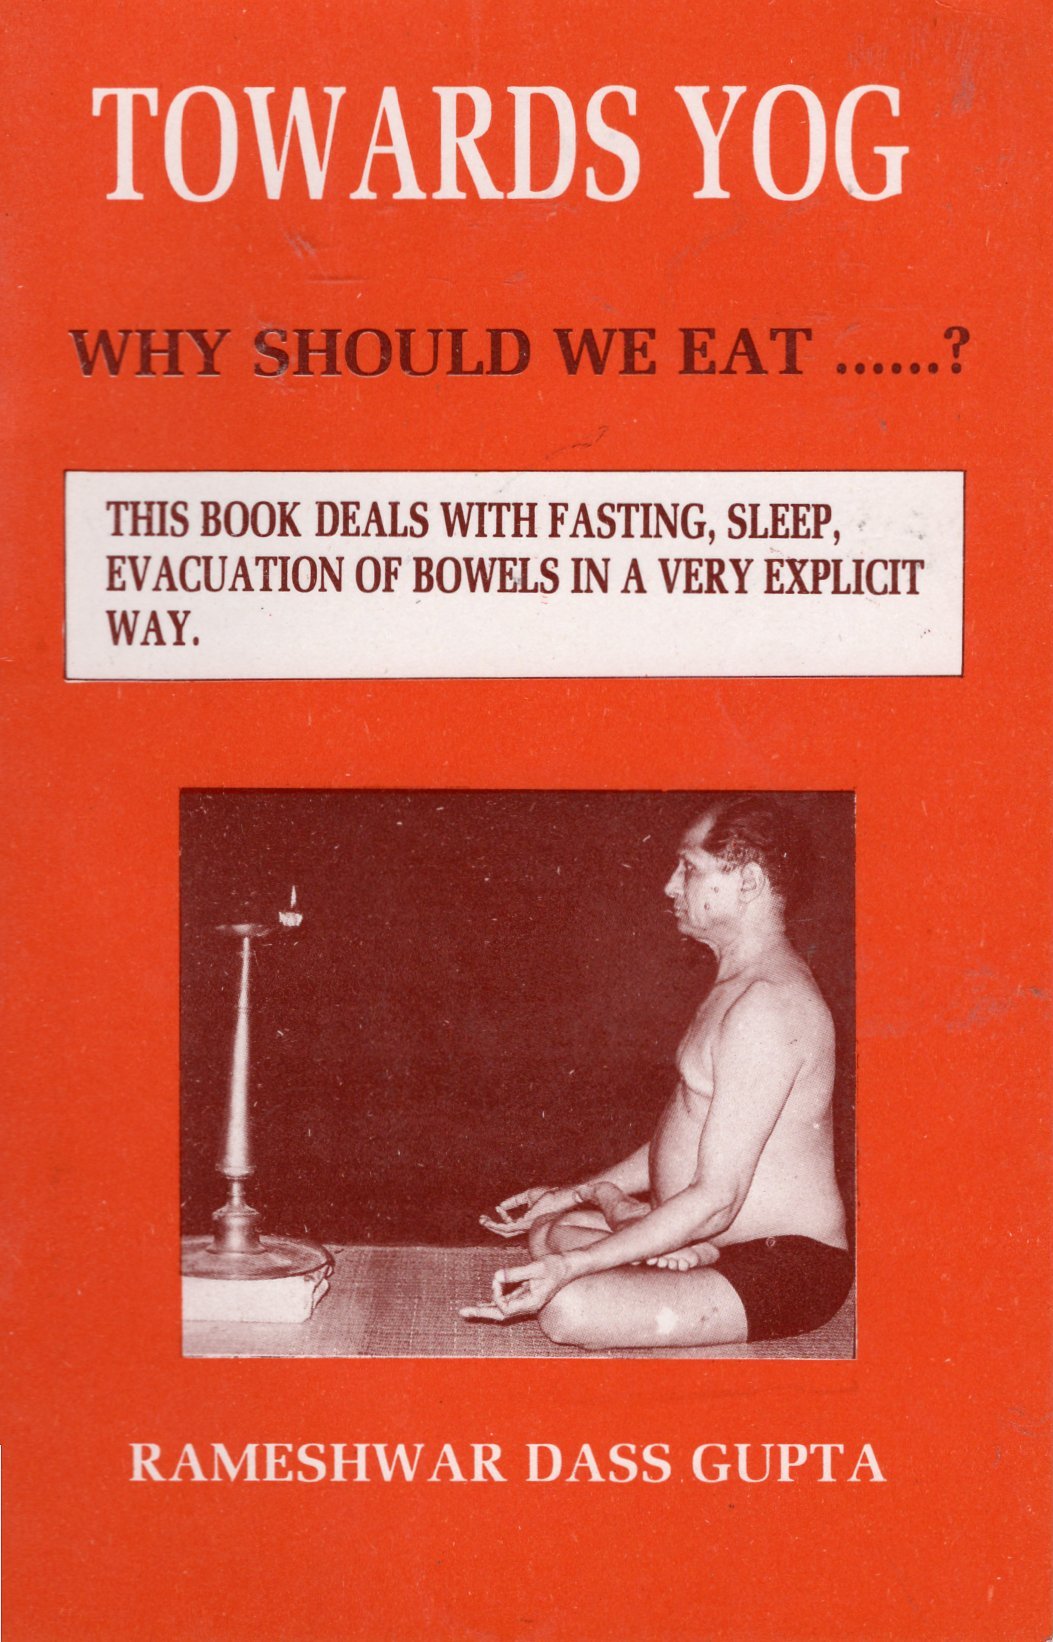 TOWARDS YOG - WHY SHOULD WE EAT......?